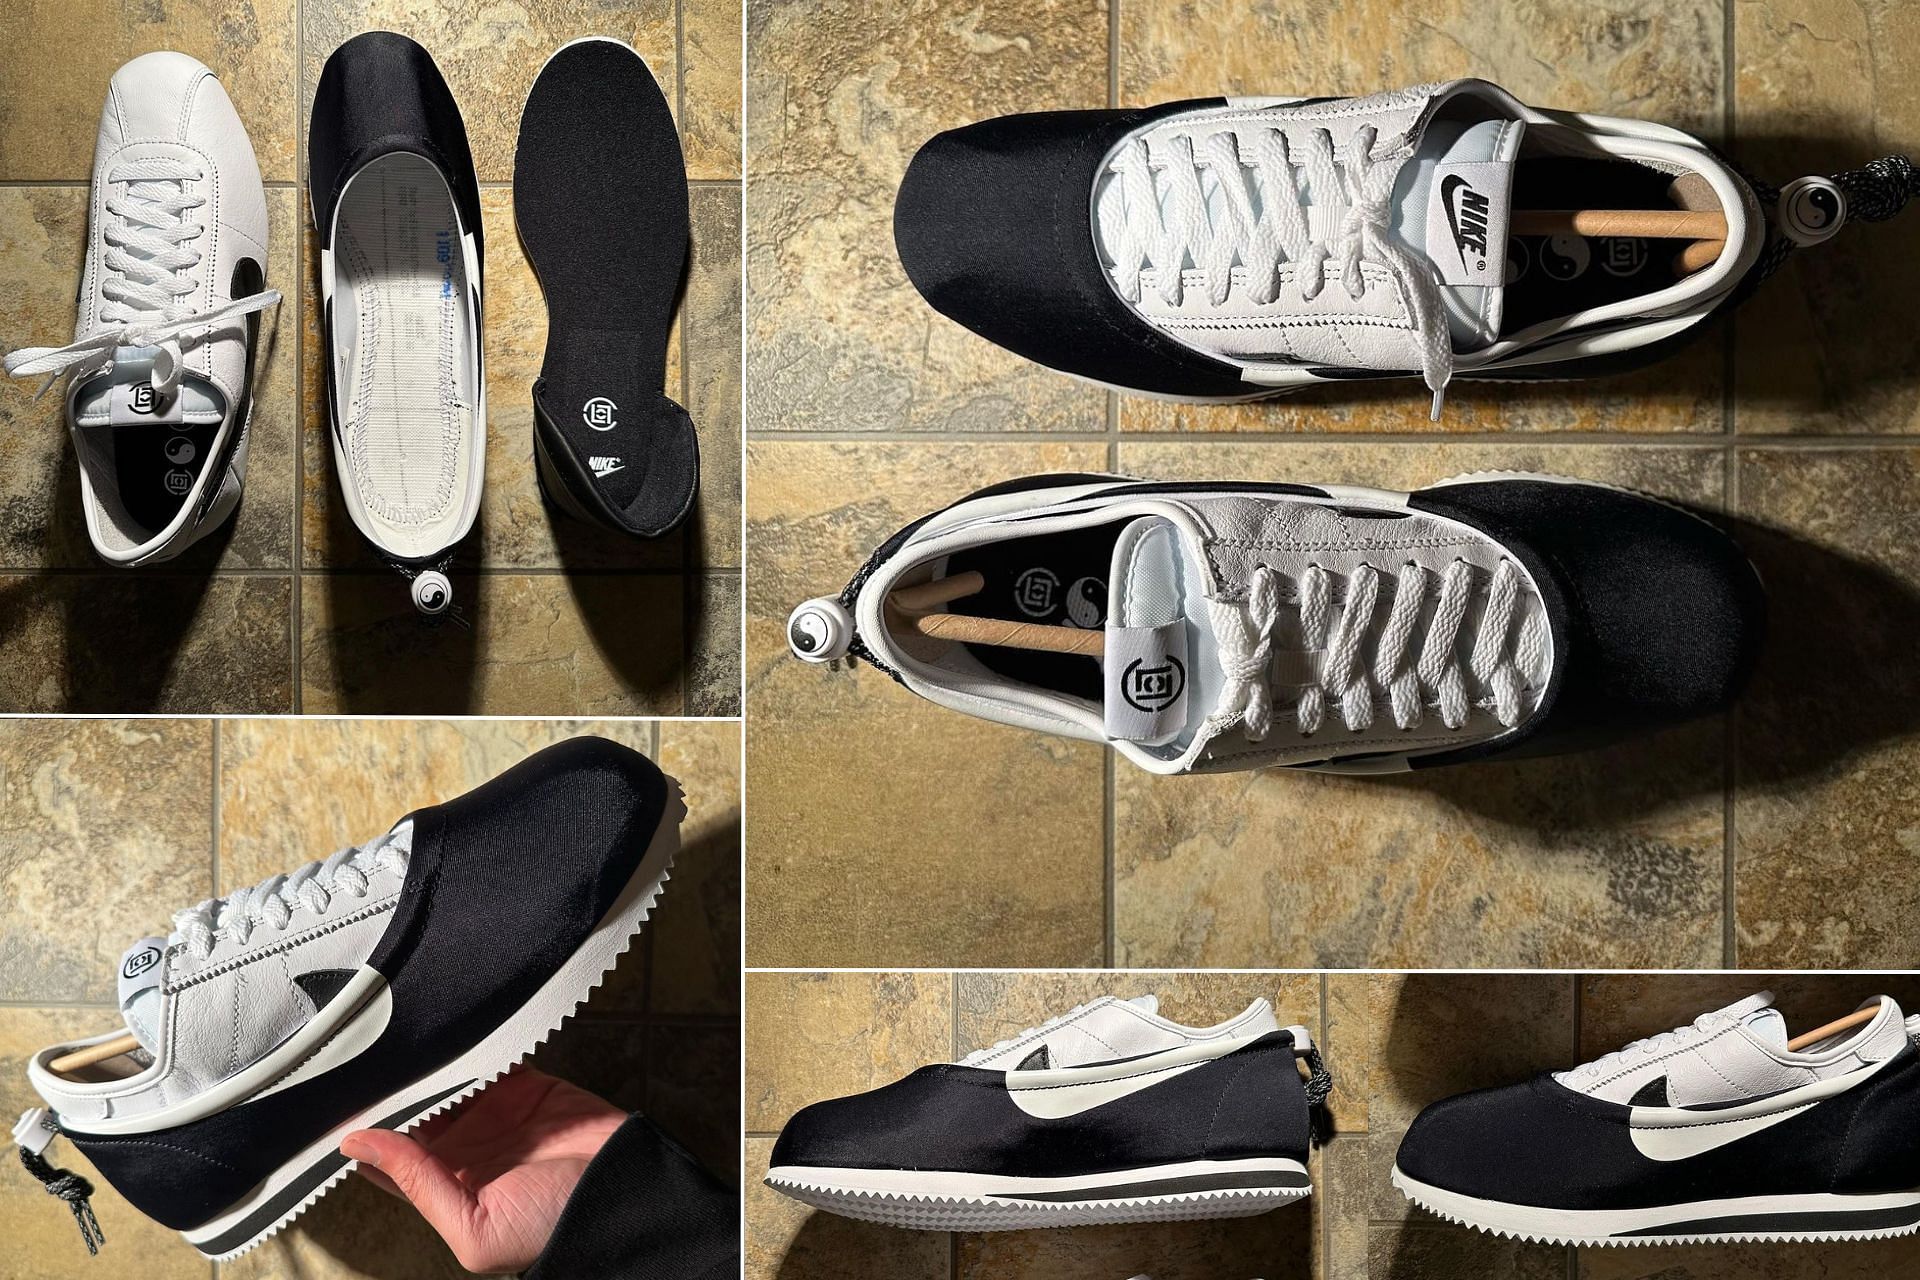 The upcoming 3-piece Nike x CLOT Cortez sneaker collection features &ldquo;Black/White,&rdquo; &quot;Black Varsity Maize,&rdquo; and &ldquo;Forrest Gump&rdquo; colorways (Image via @aplasticplant / Instagram)